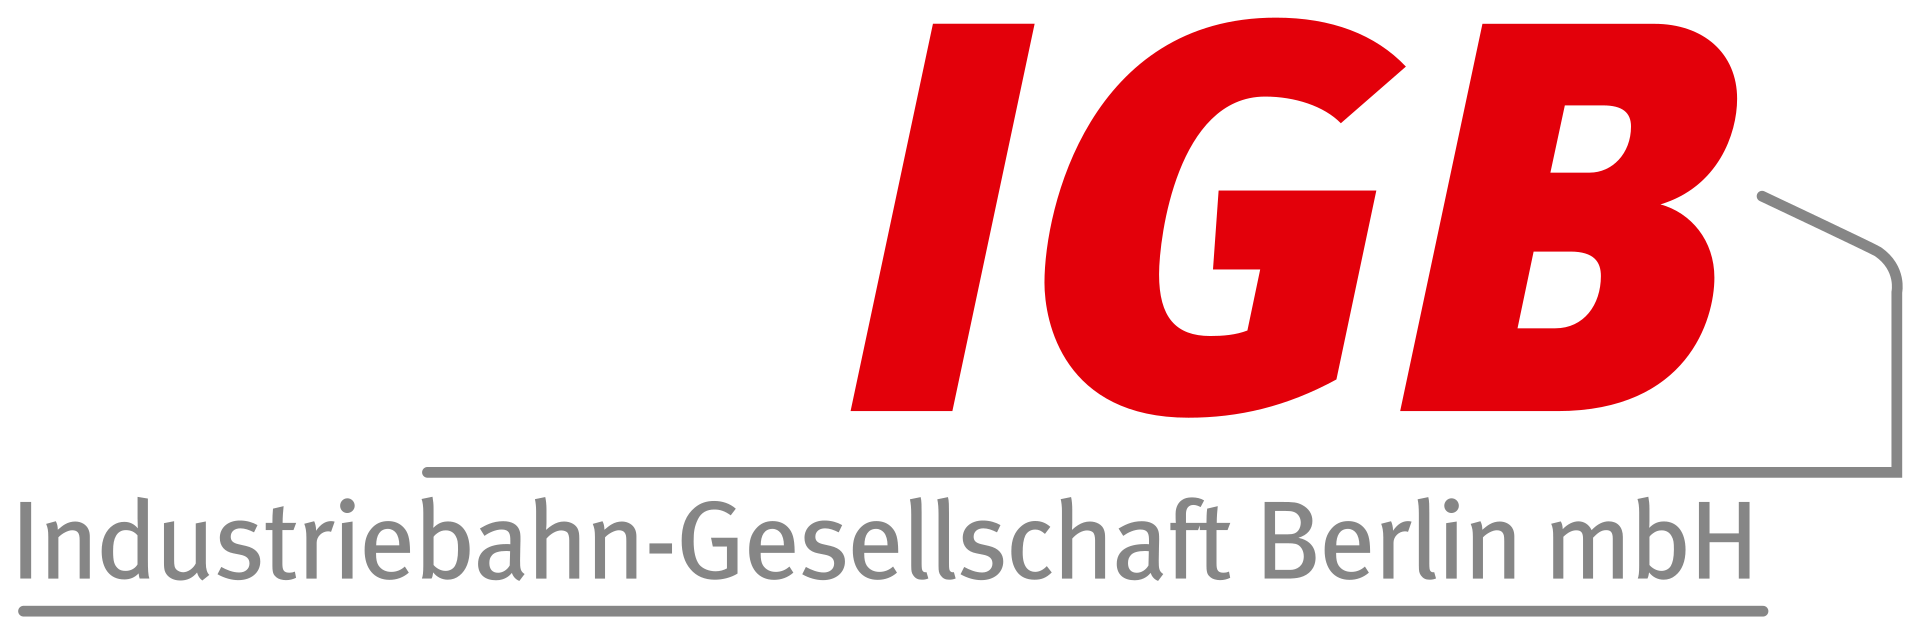 IGB Industriebahn-Gesellschaft Berlin mbH